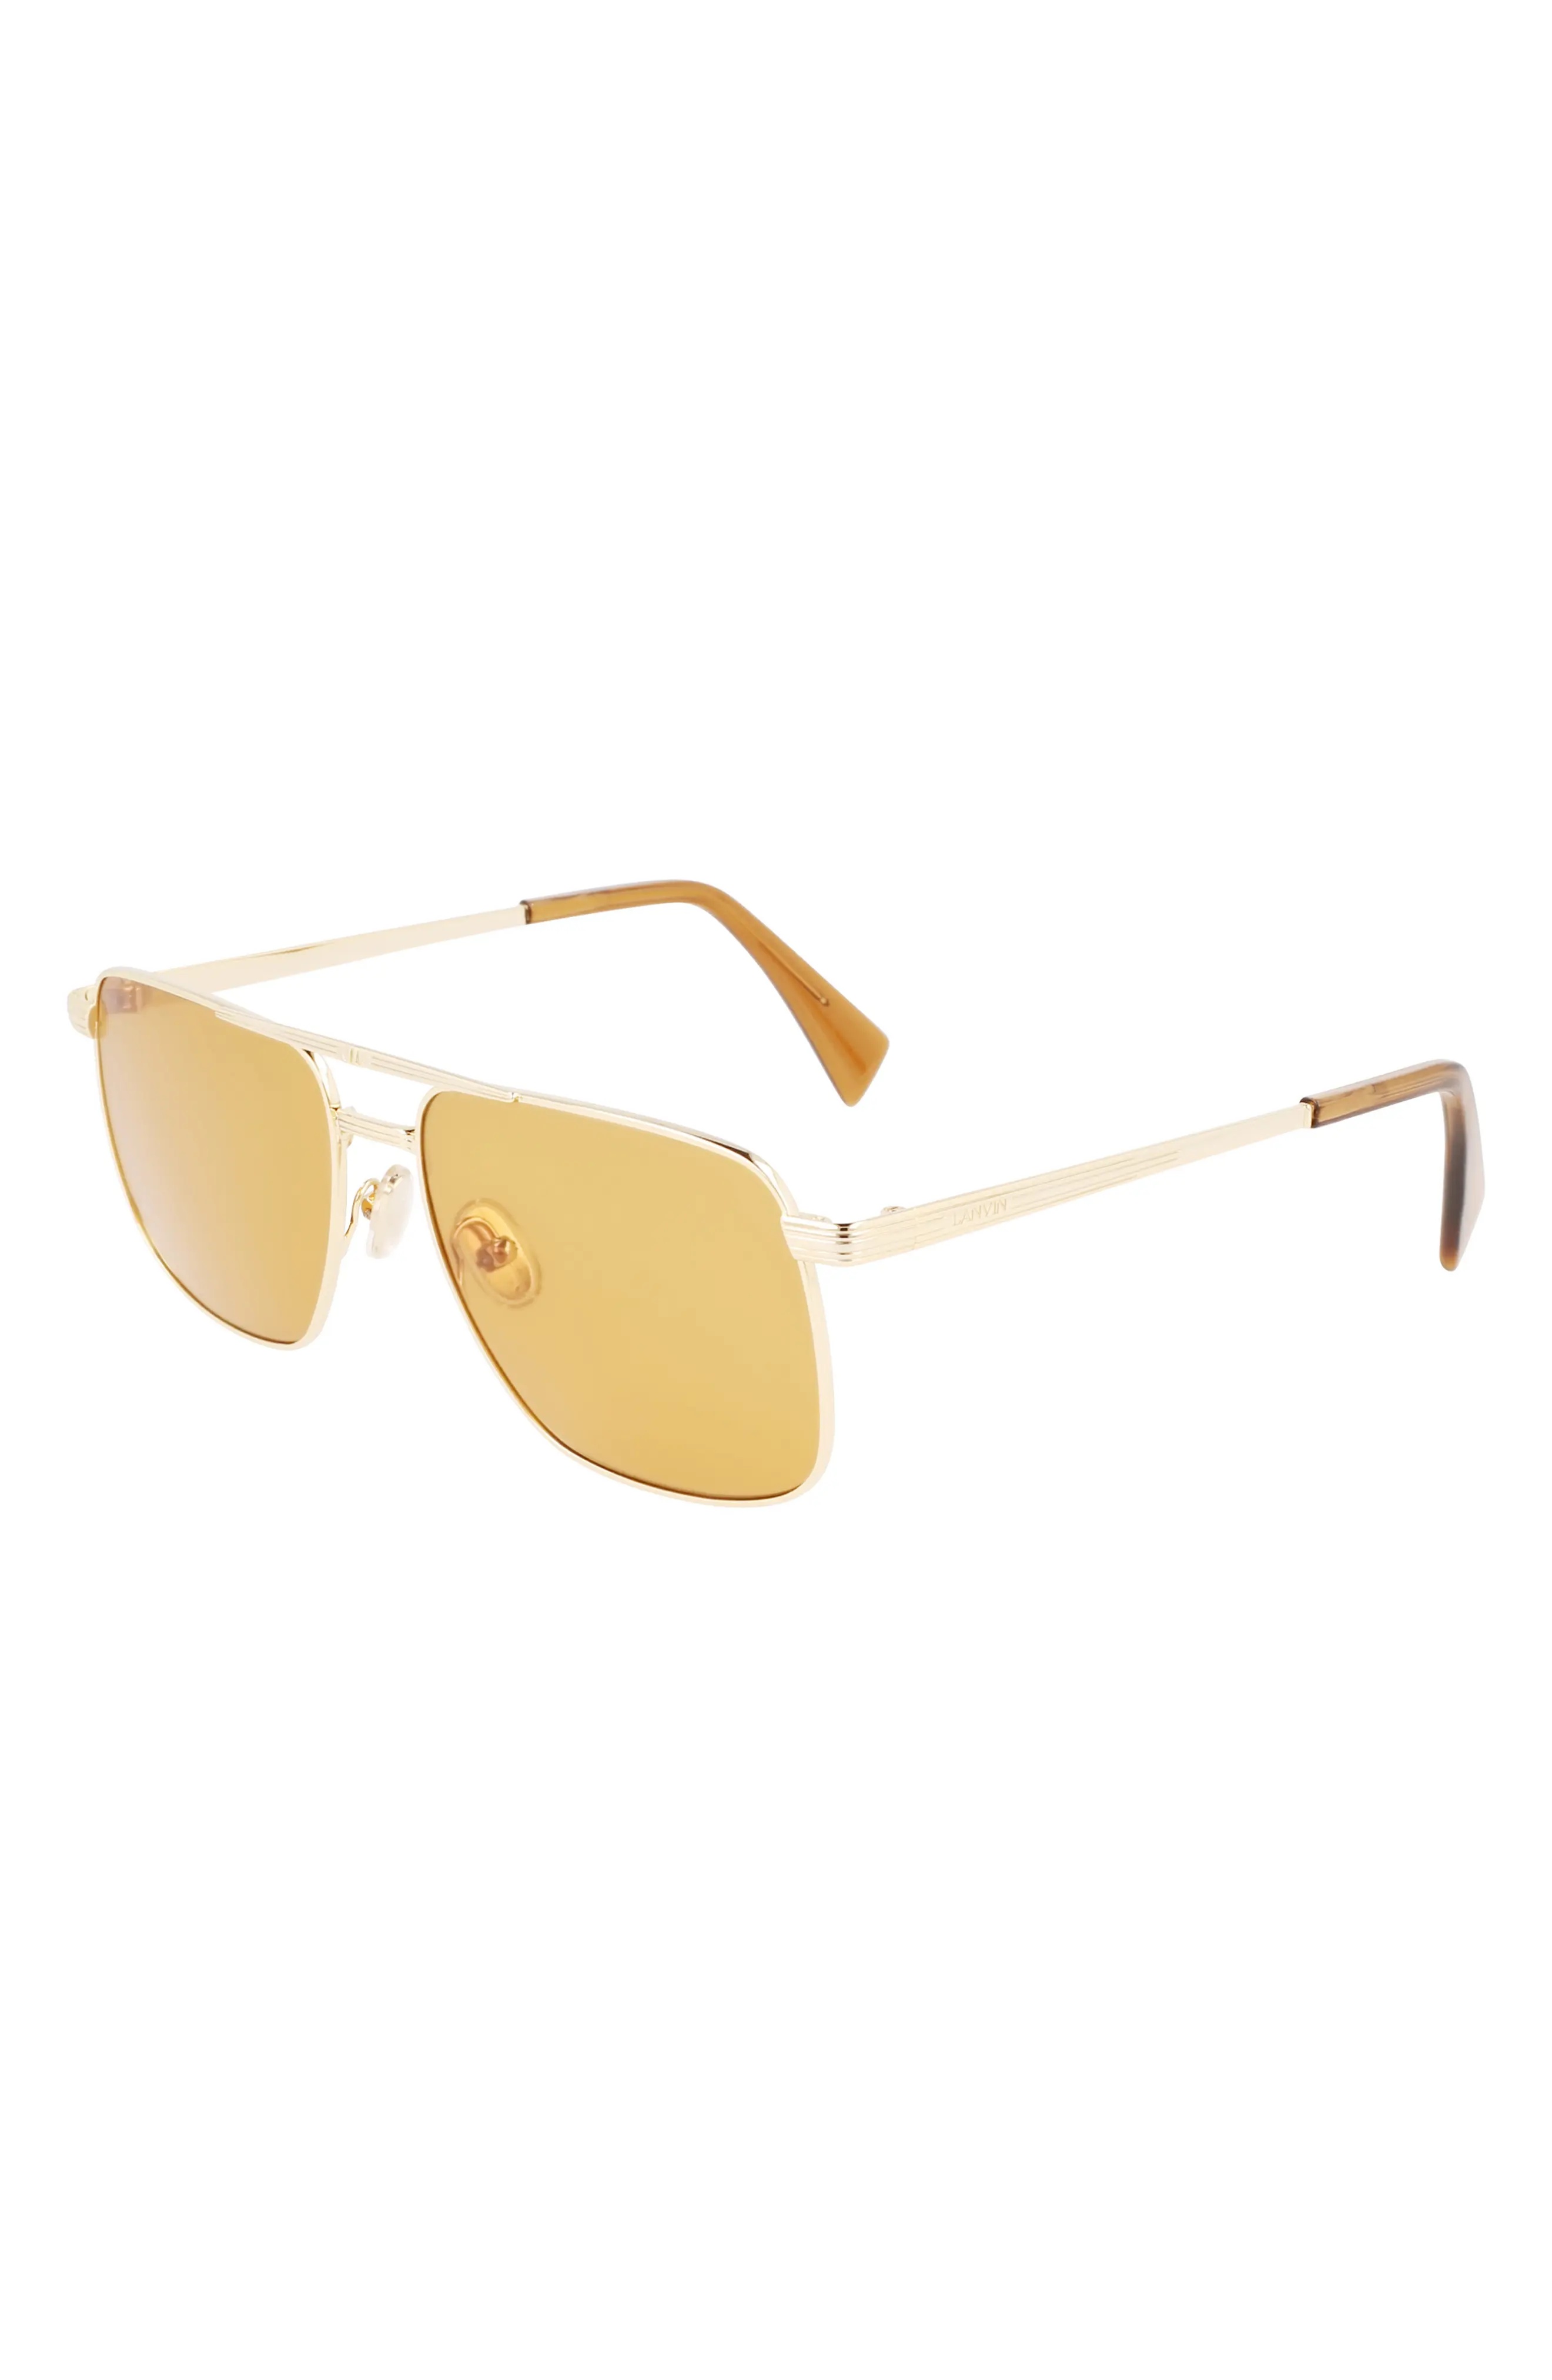 JL 58mm Rectangular Sunglasses in Gold /Caramel - 2